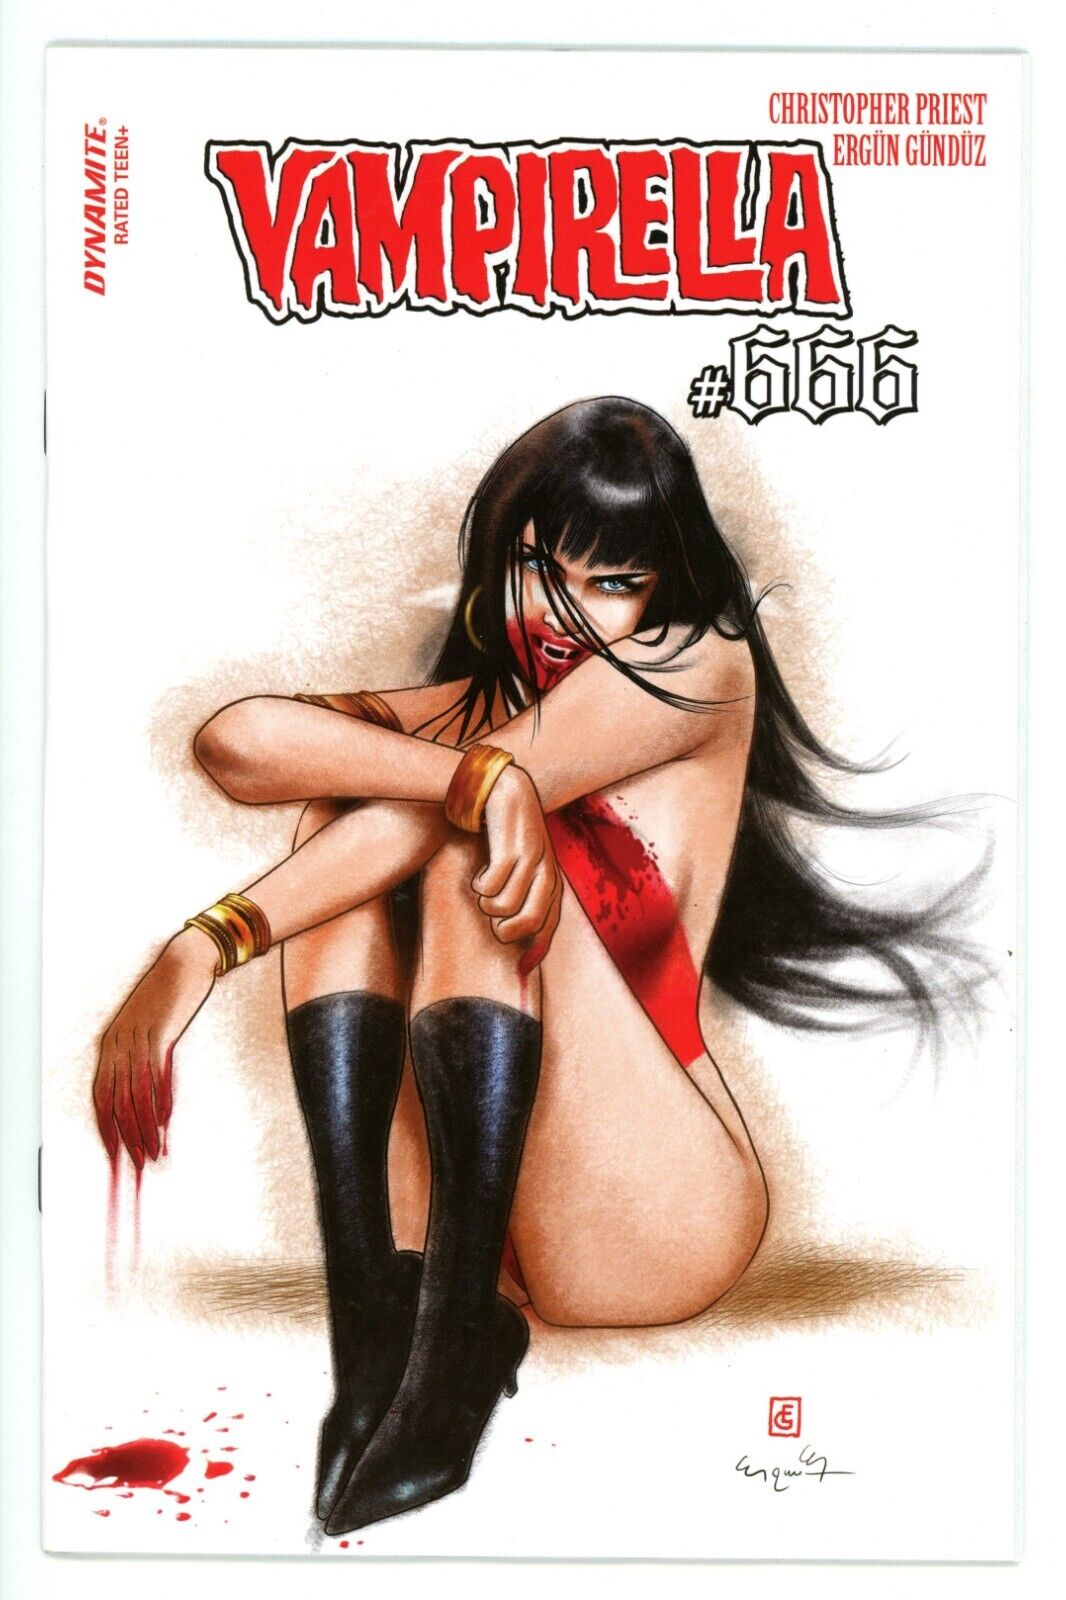 Vampirella #666  |  Cover I   |   1:10 Ergün Gündüz Variant  |   NM  NEW